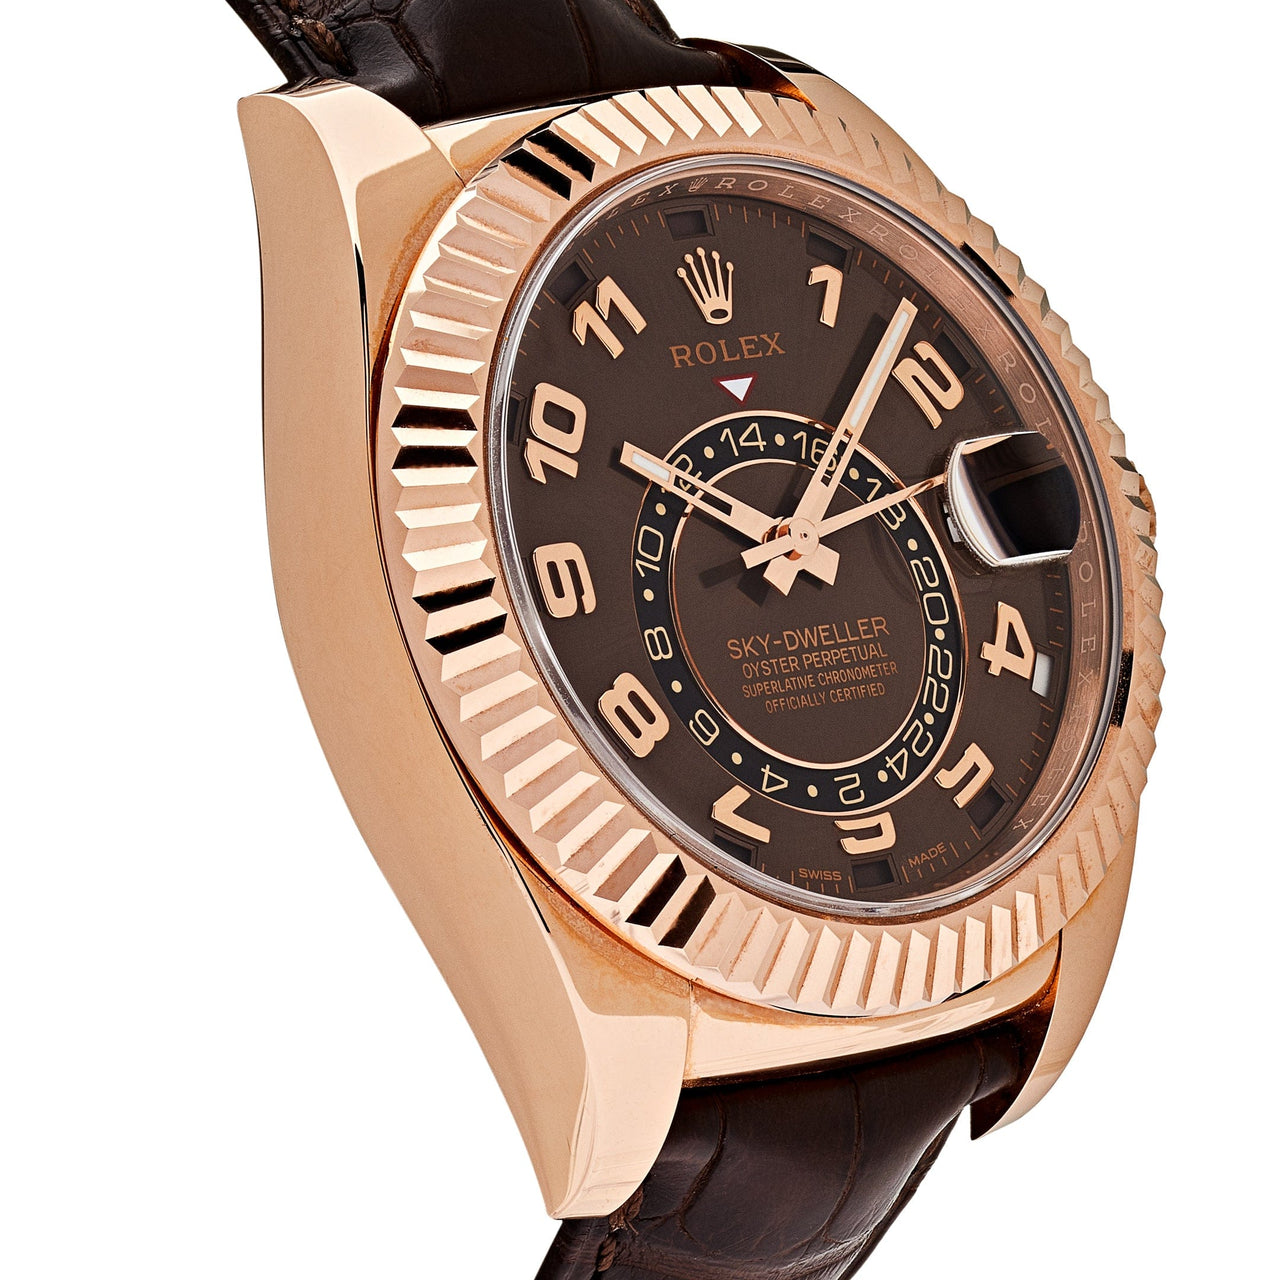 Rolex Sky-Dweller Rose Gold Chocolate Dial Leather Strap 326135 Wrist Aficionado